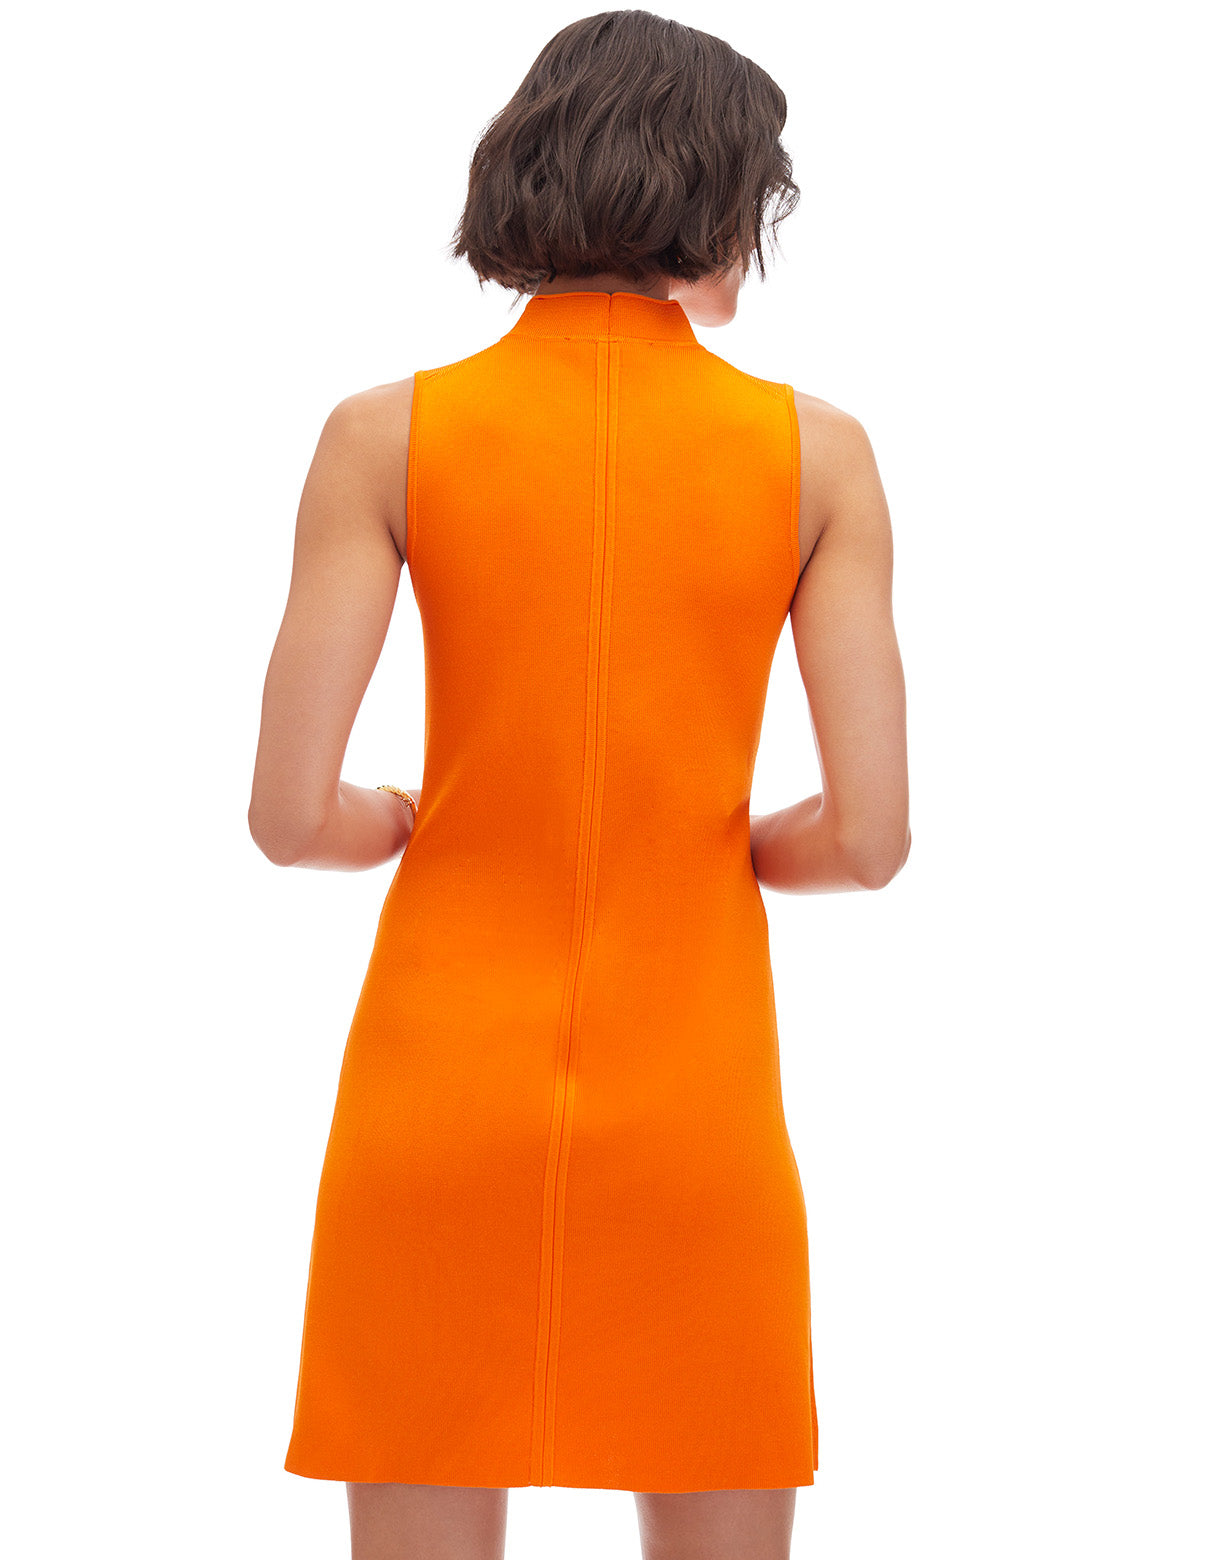 madelyn mock neck sleeveless mini dress orange - women's cute resortwear dresses